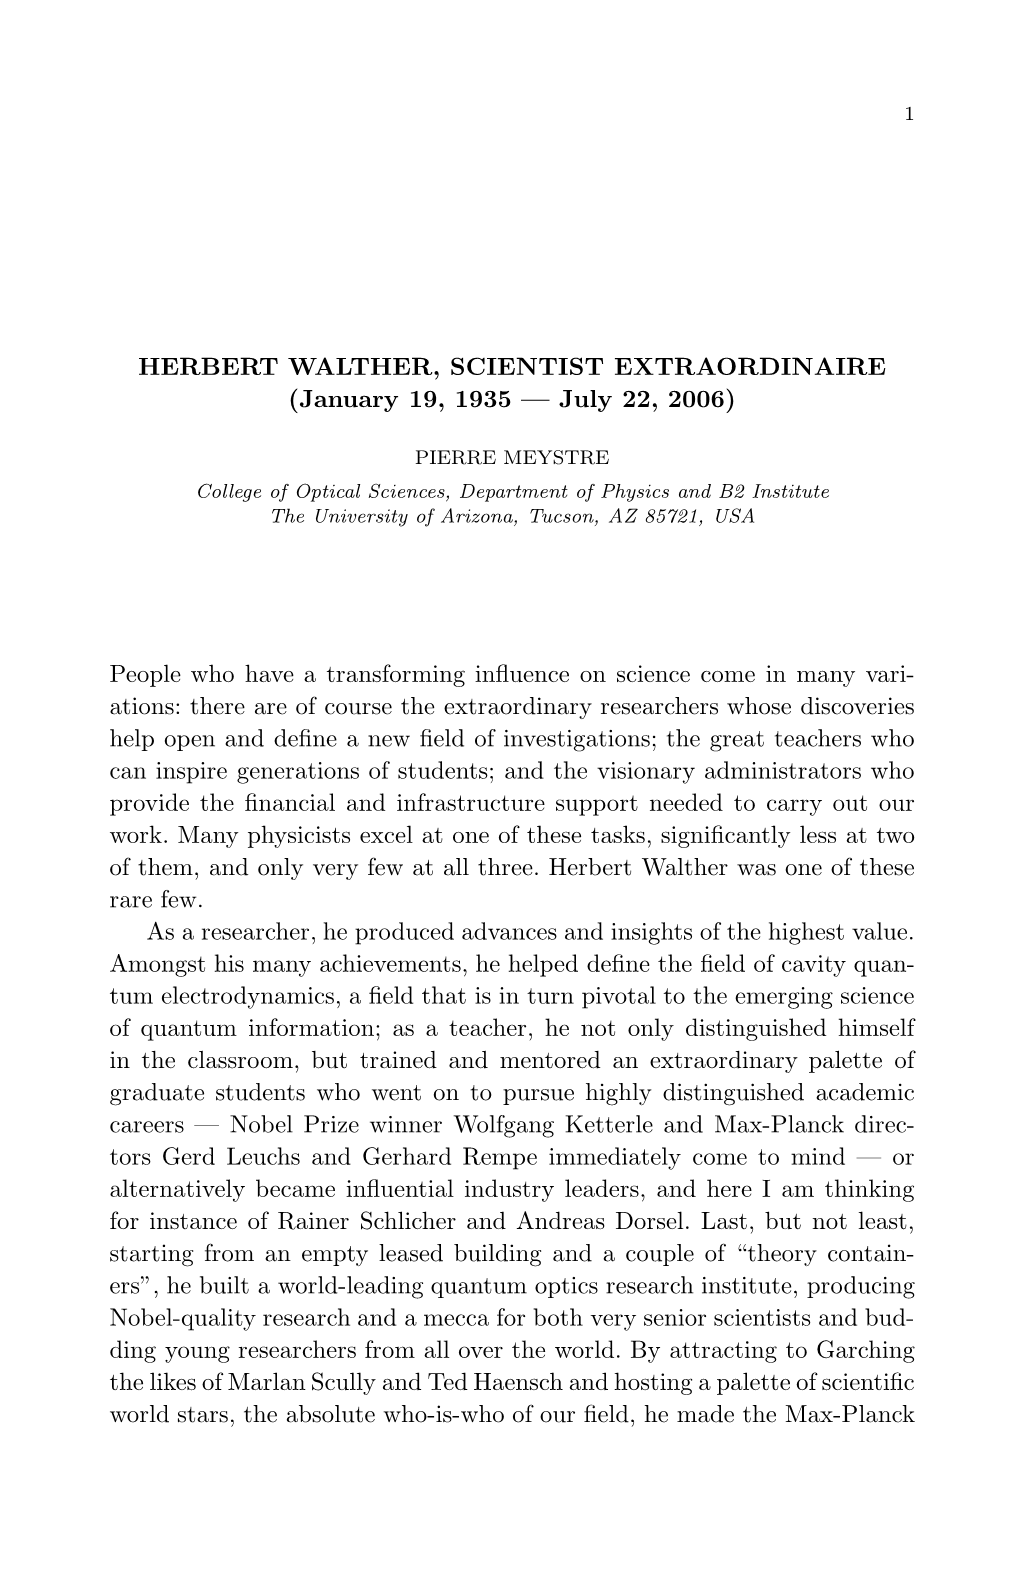 HERBERT WALTHER, SCIENTIST EXTRAORDINAIRE (January 19, 1935 — July 22, 2006)